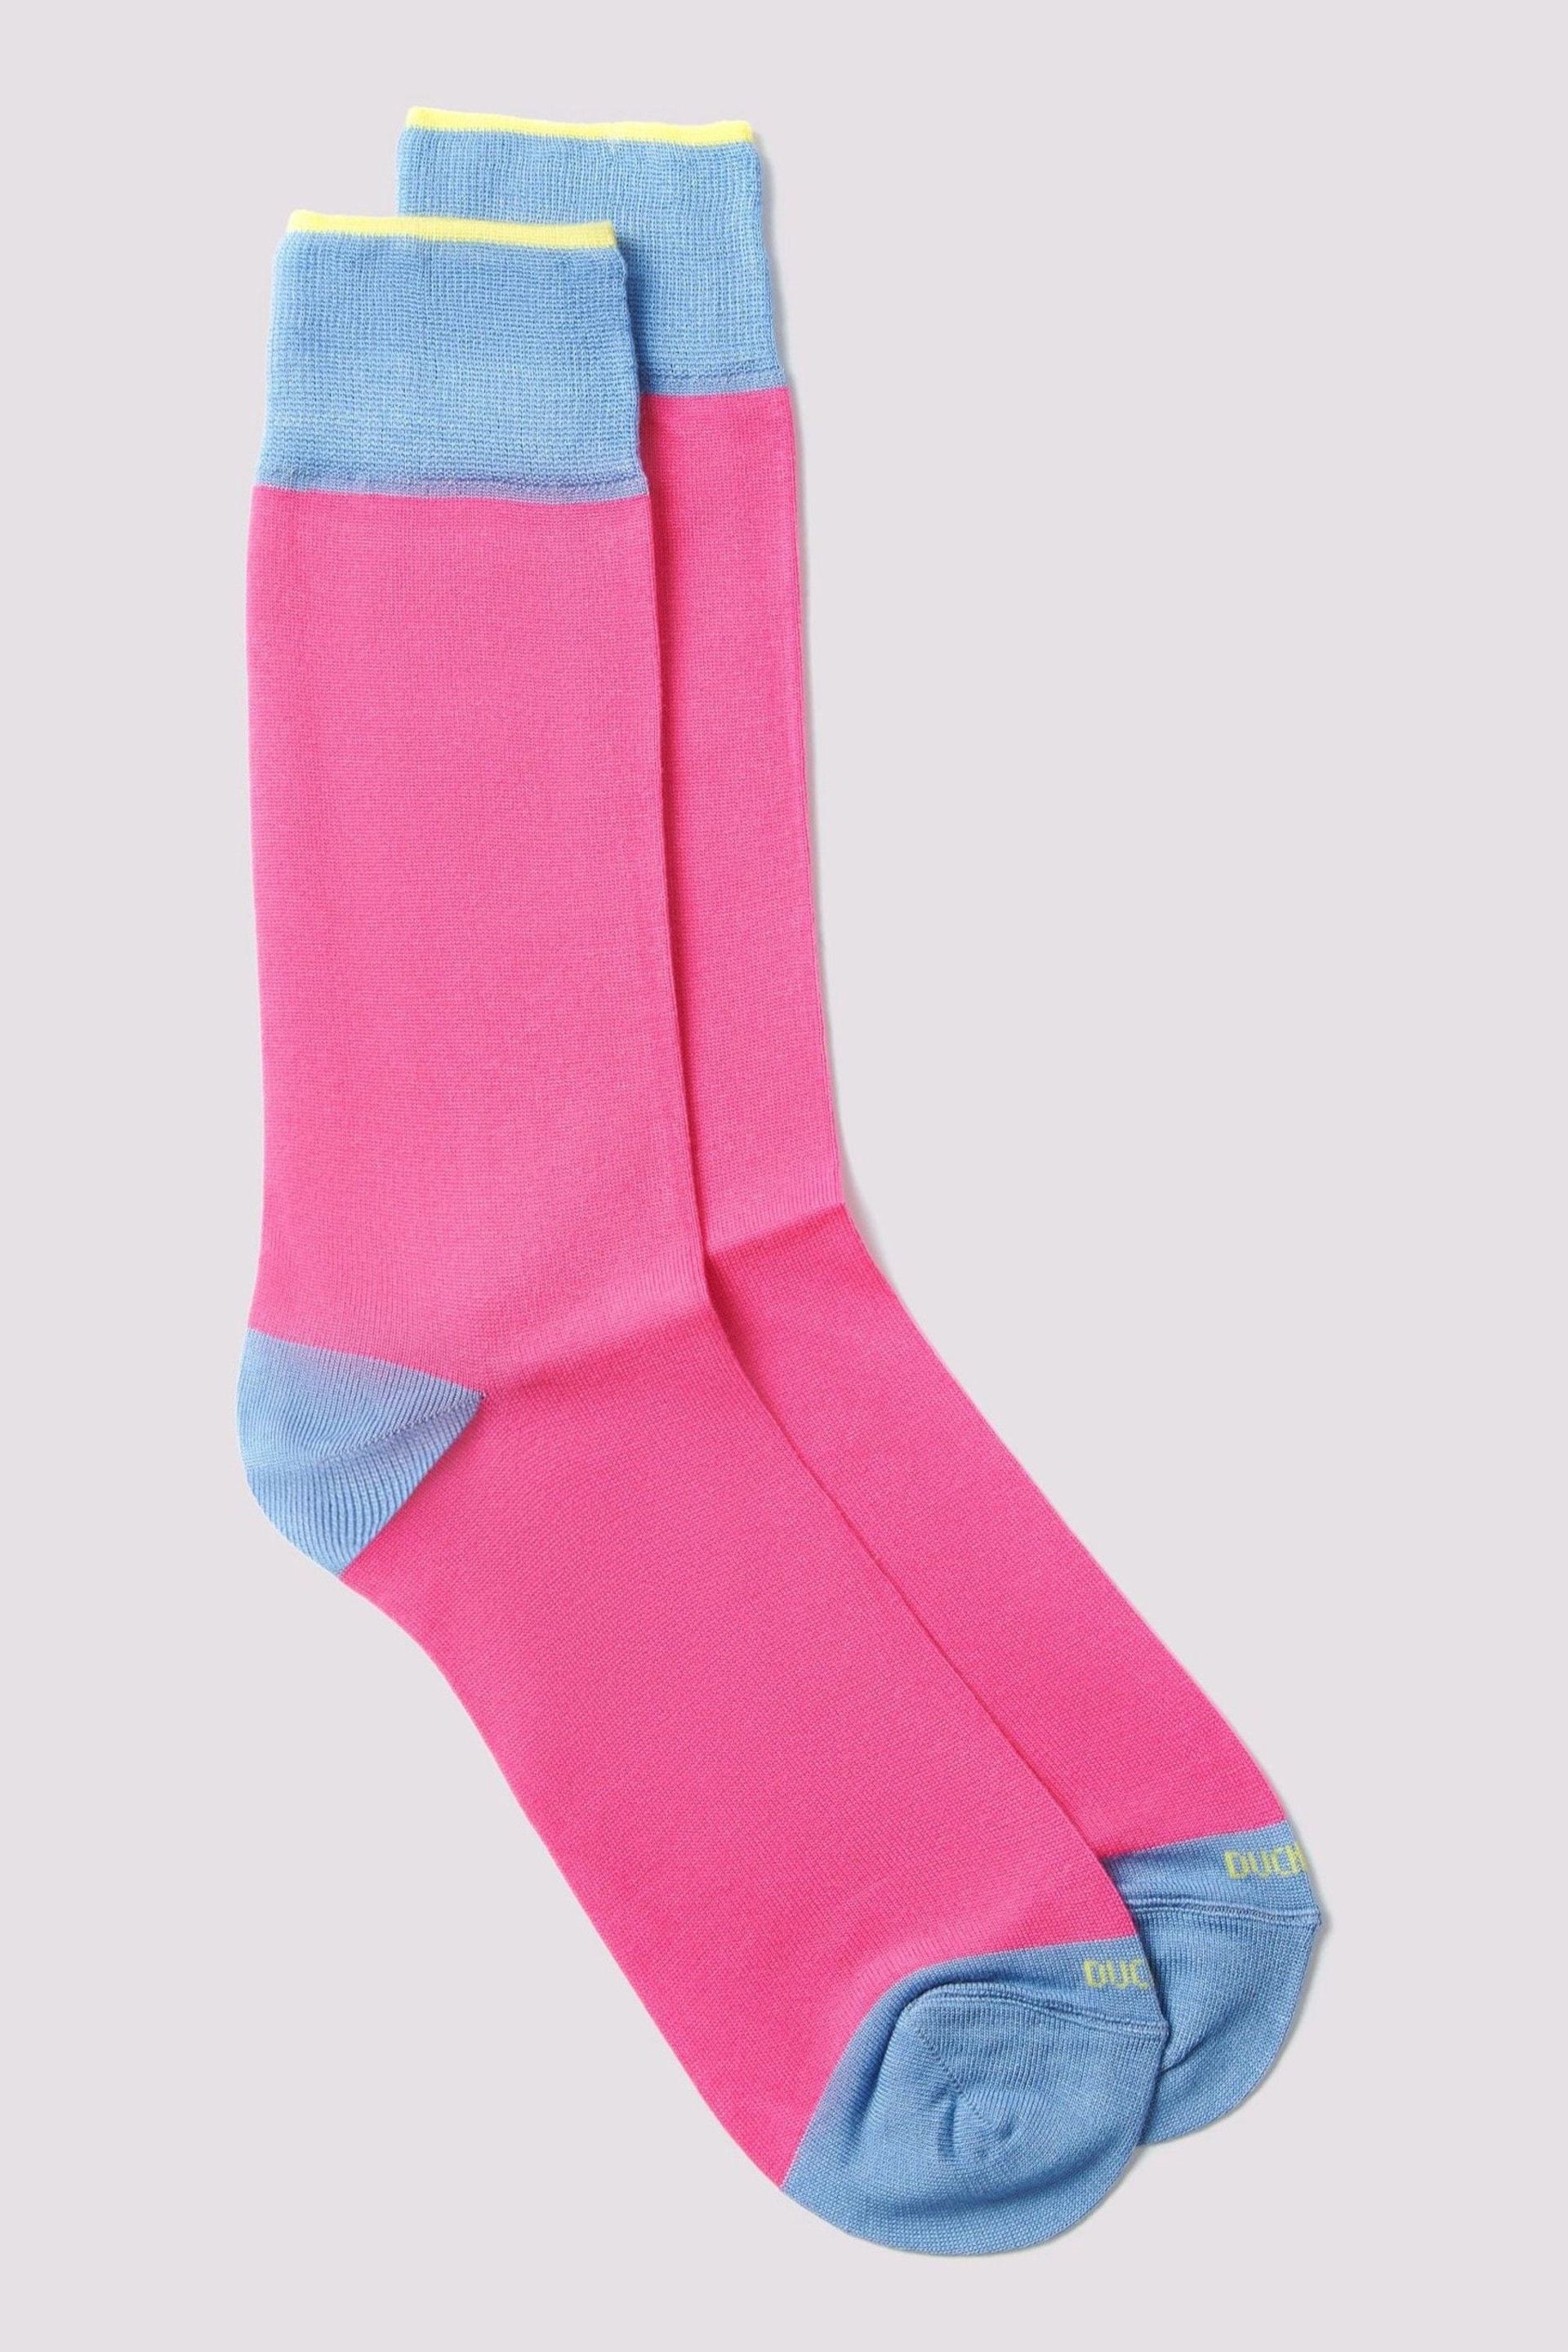 Duchamp Mens Pink Heel Toe Socks - Image 1 of 3